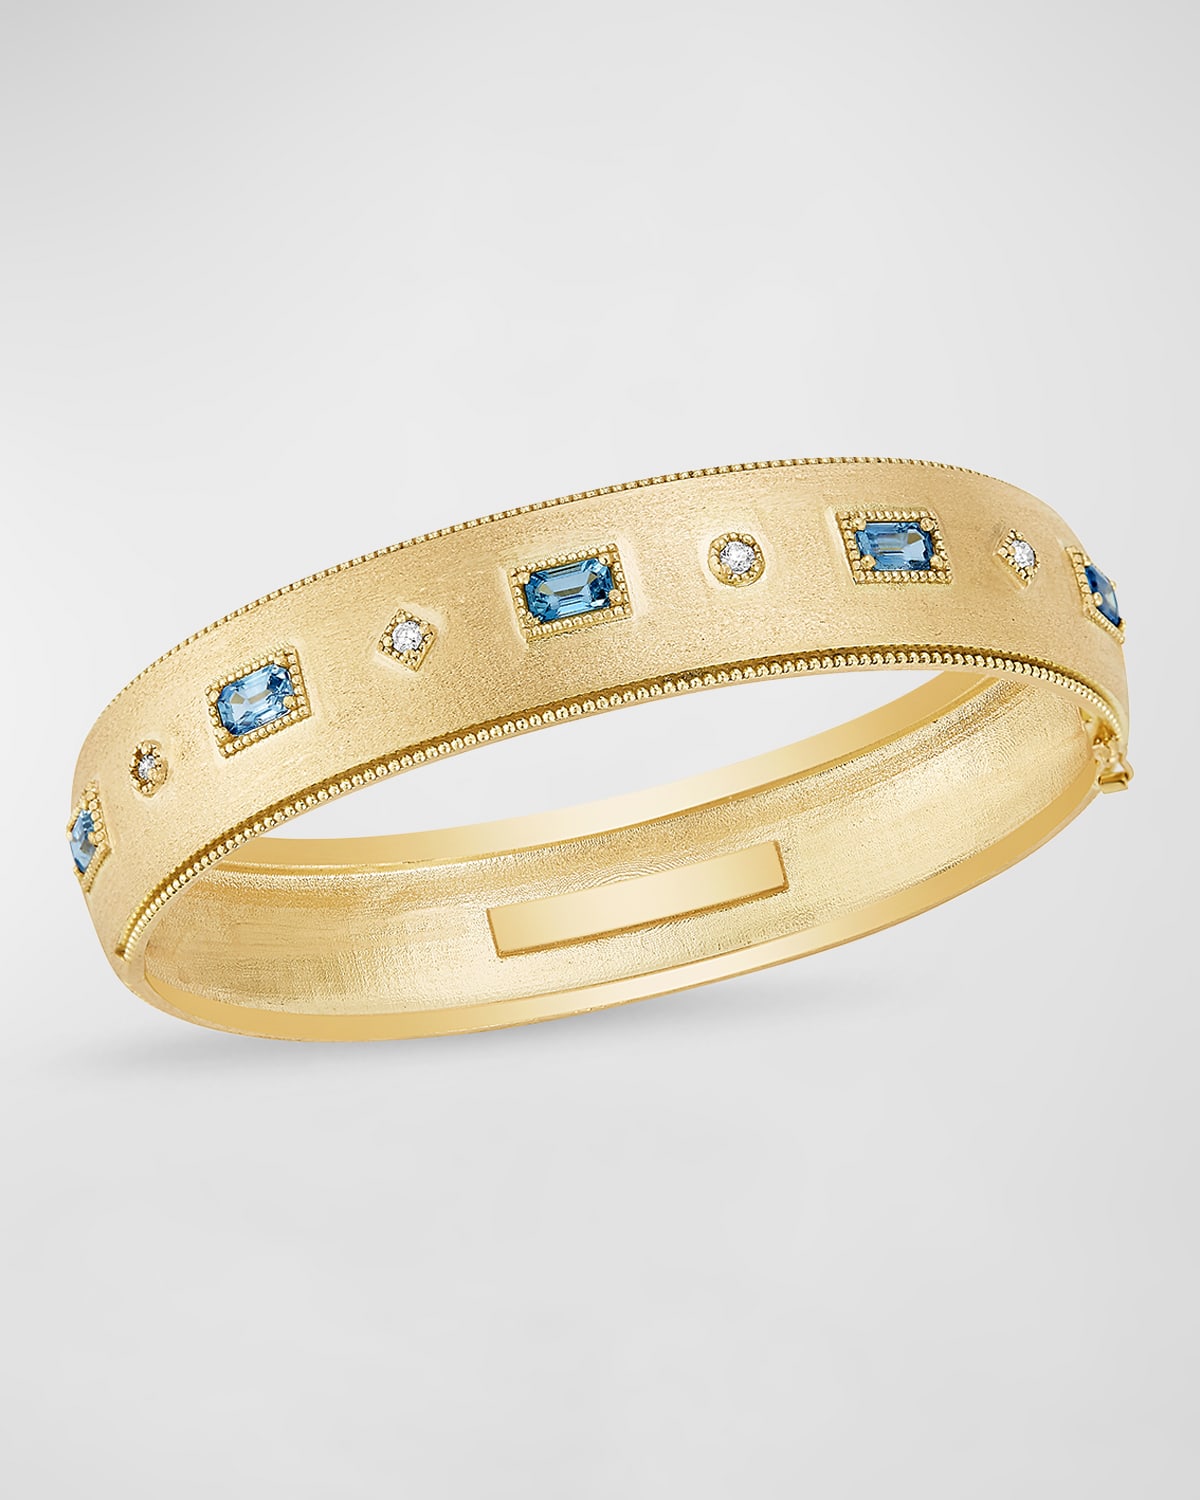 Tanya Farah 18k Yellow Gold Sapphire And Diamond Bangle Bracelet